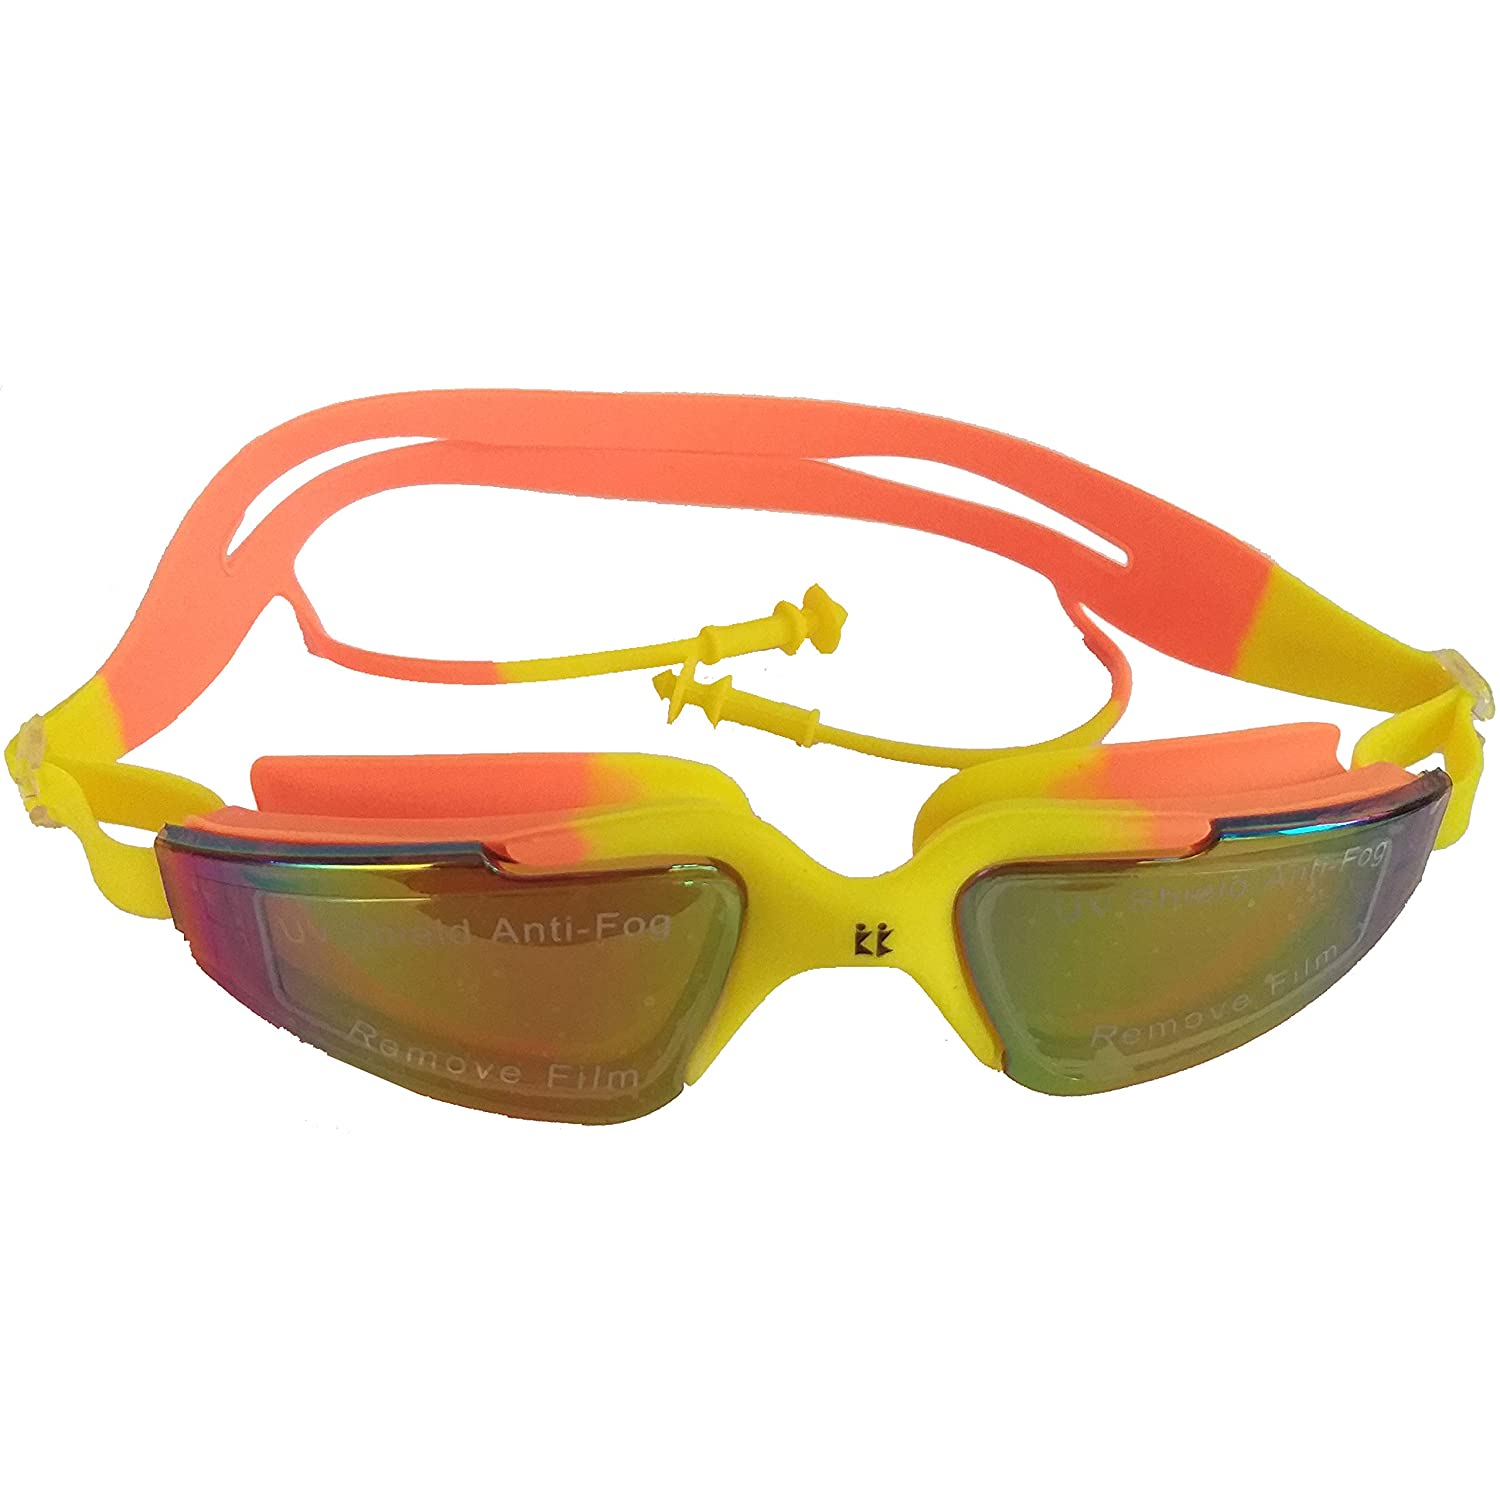 Konex CI-8311 Swimming Goggle, Yellow/Orange - Best Price online Prokicksports.com